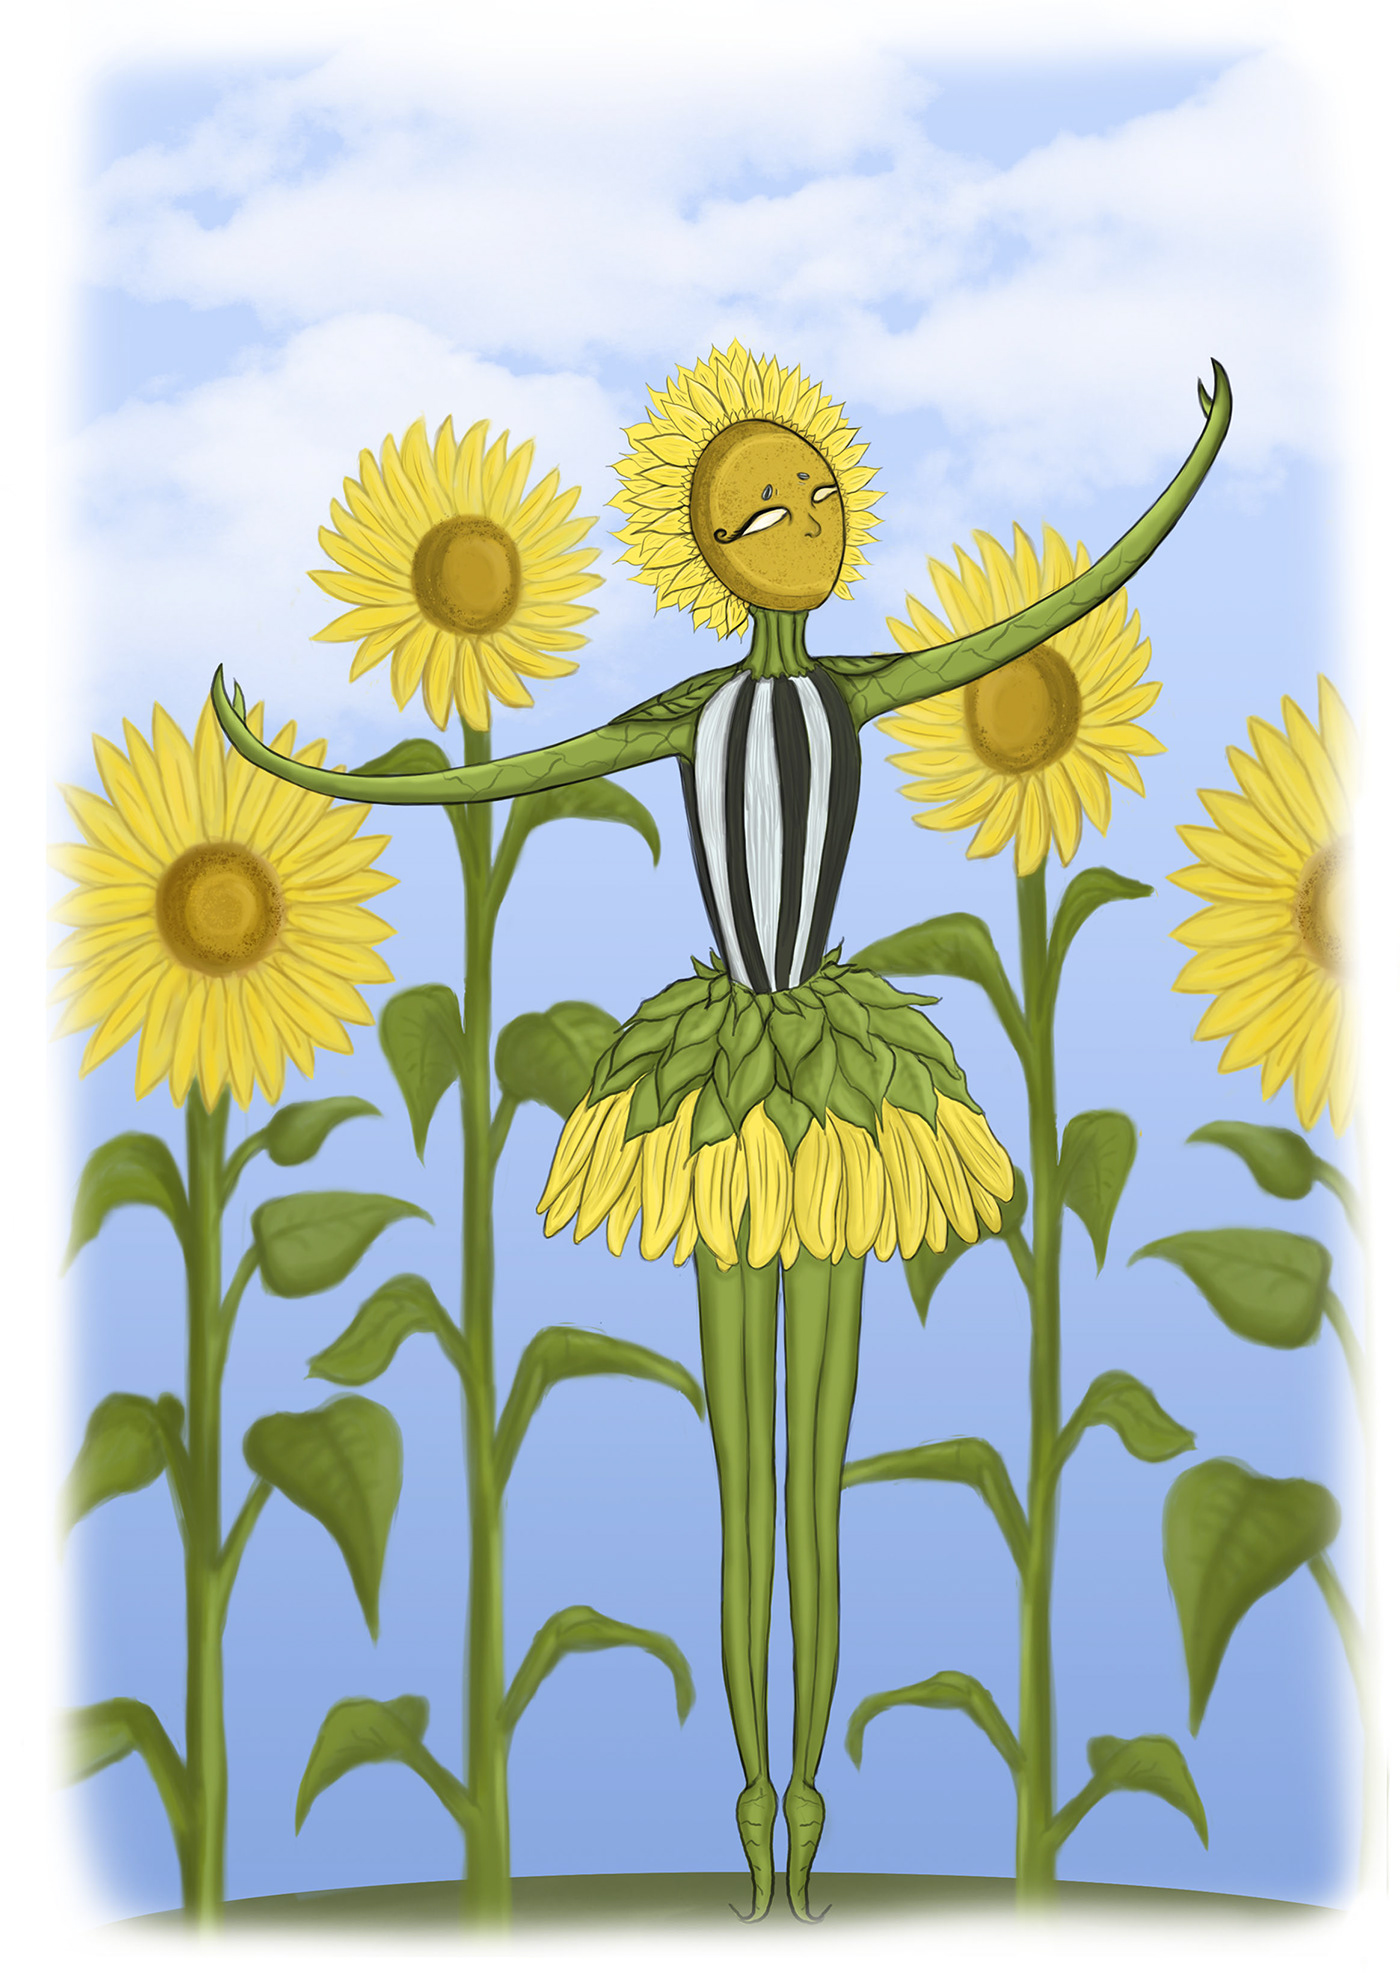 plants illustration Digital Art  ILLUSTRATION  Drawing  Character design  sketch artwork girasol sunflower